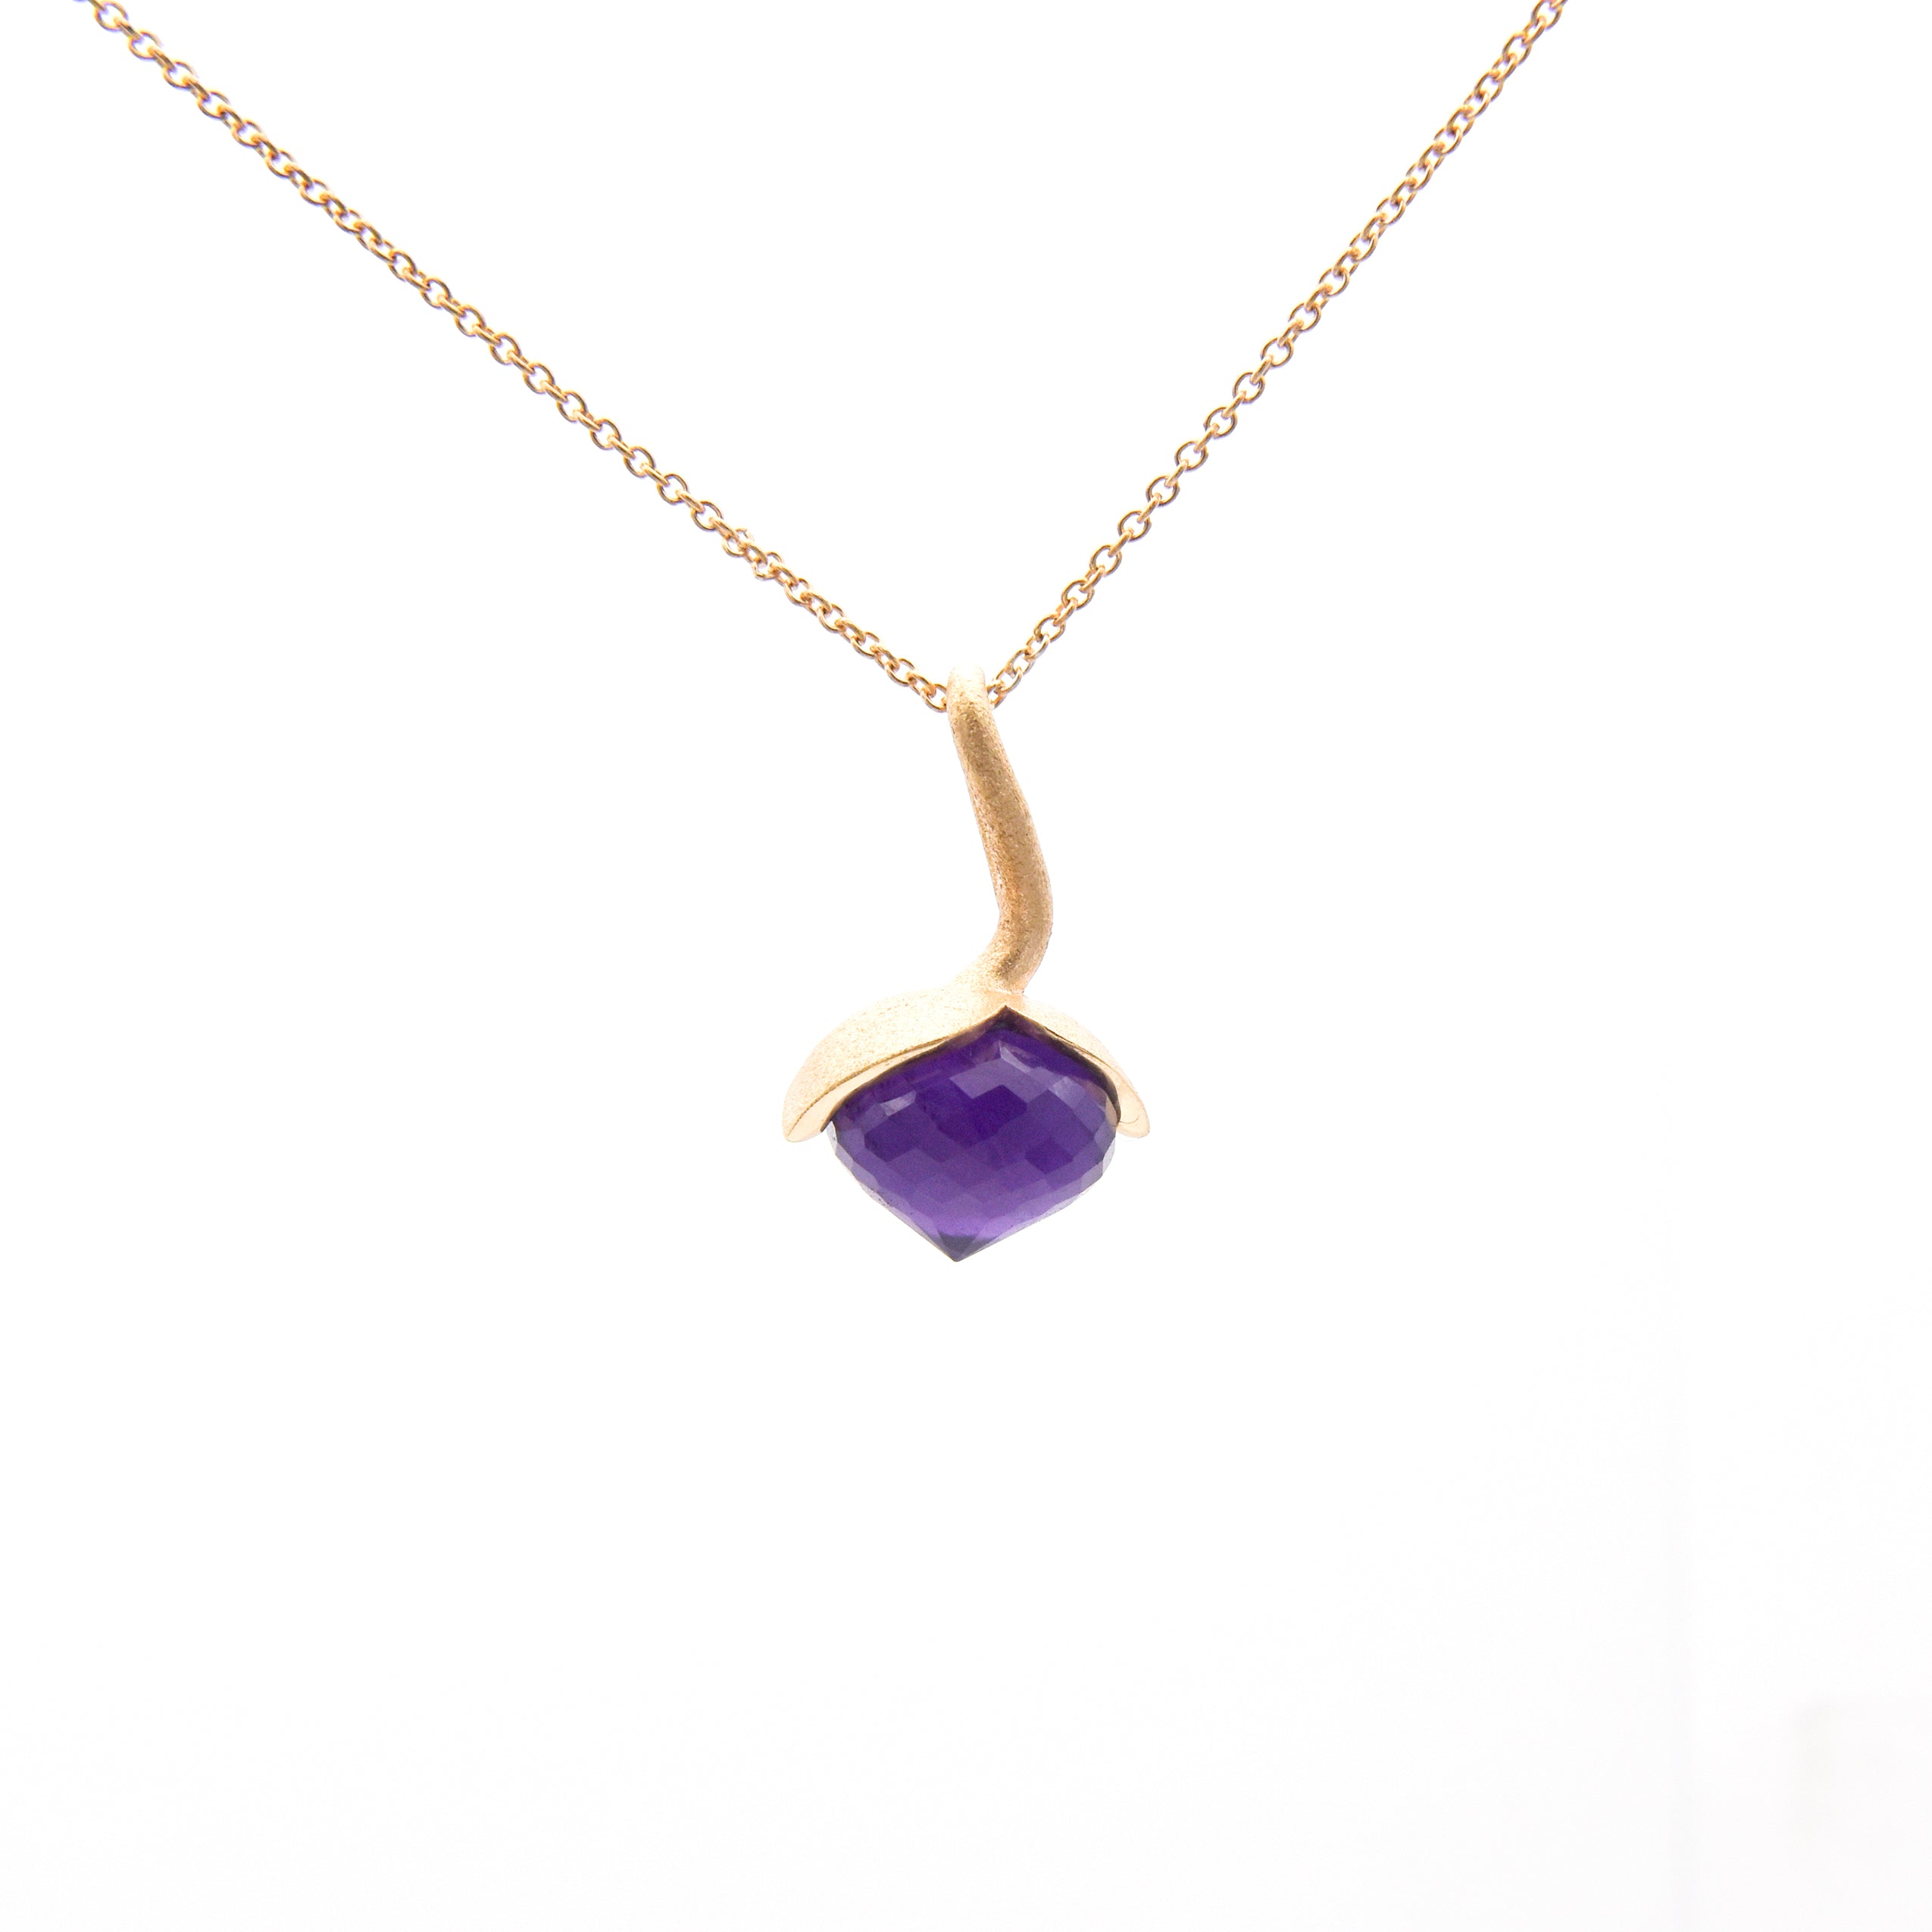 Dolce pendant "medium" with amethyst 925/-